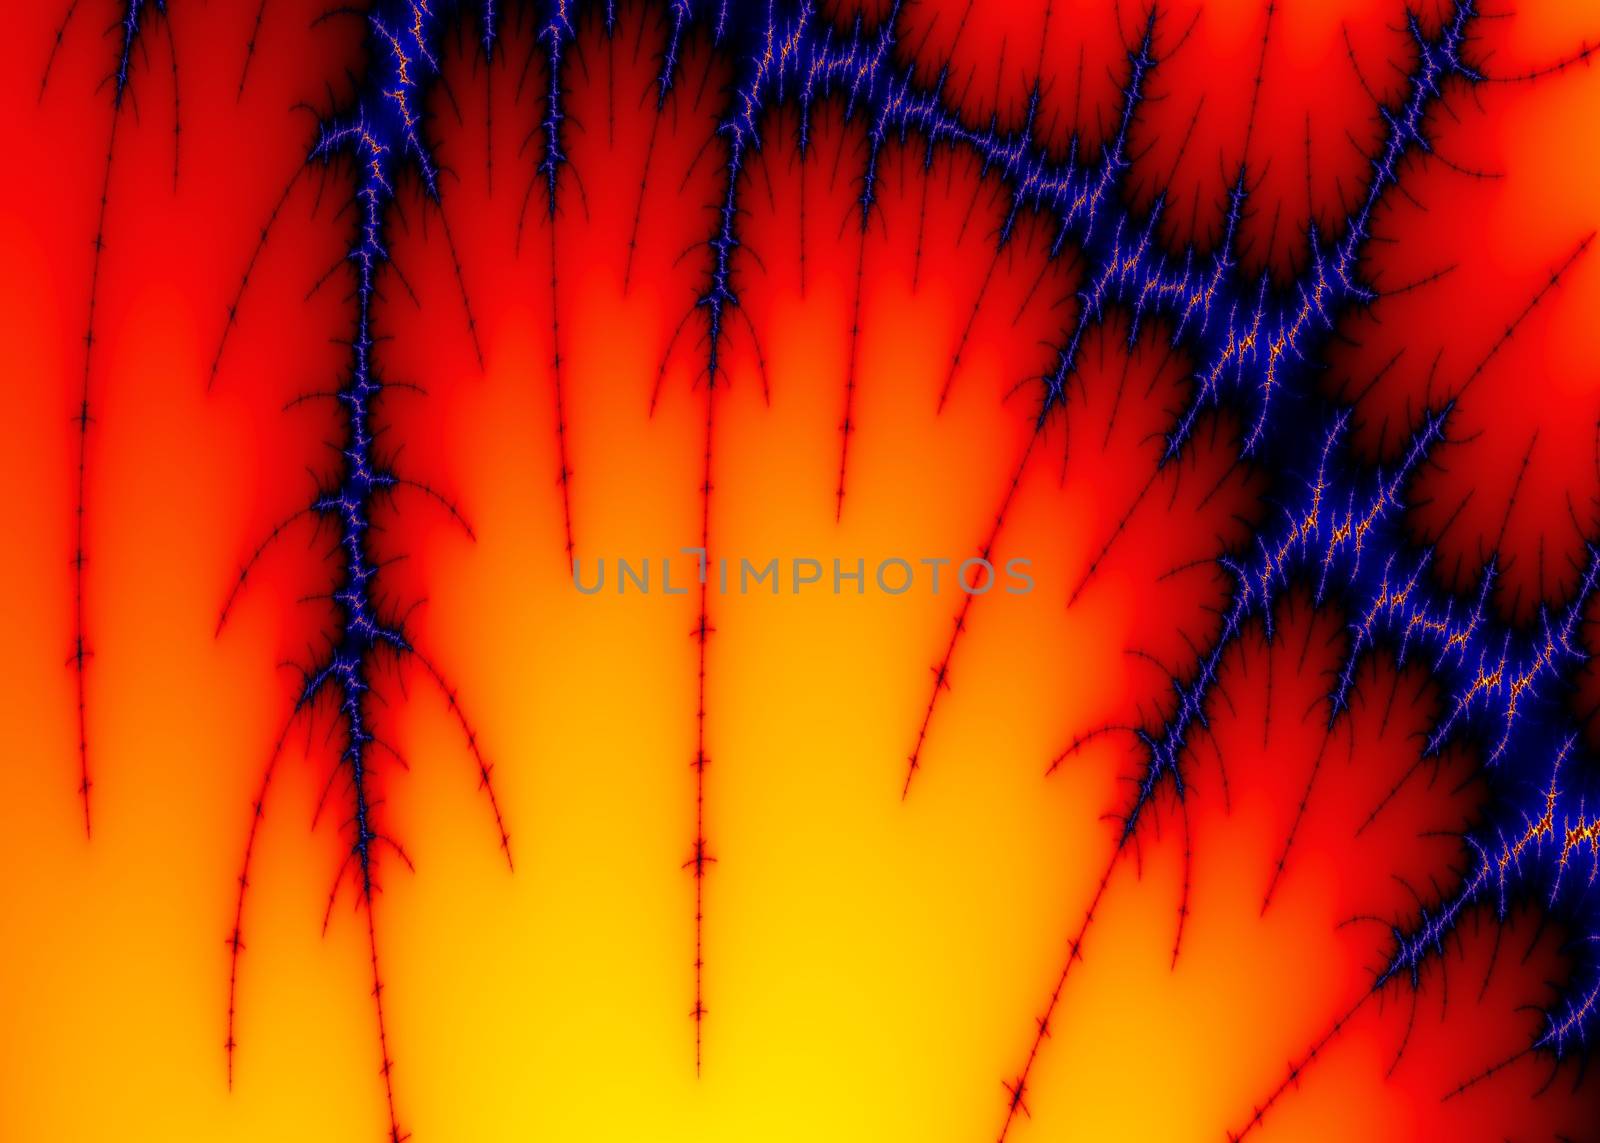 Abstract Fractal on Burning Background - Colorful Illustration, Image